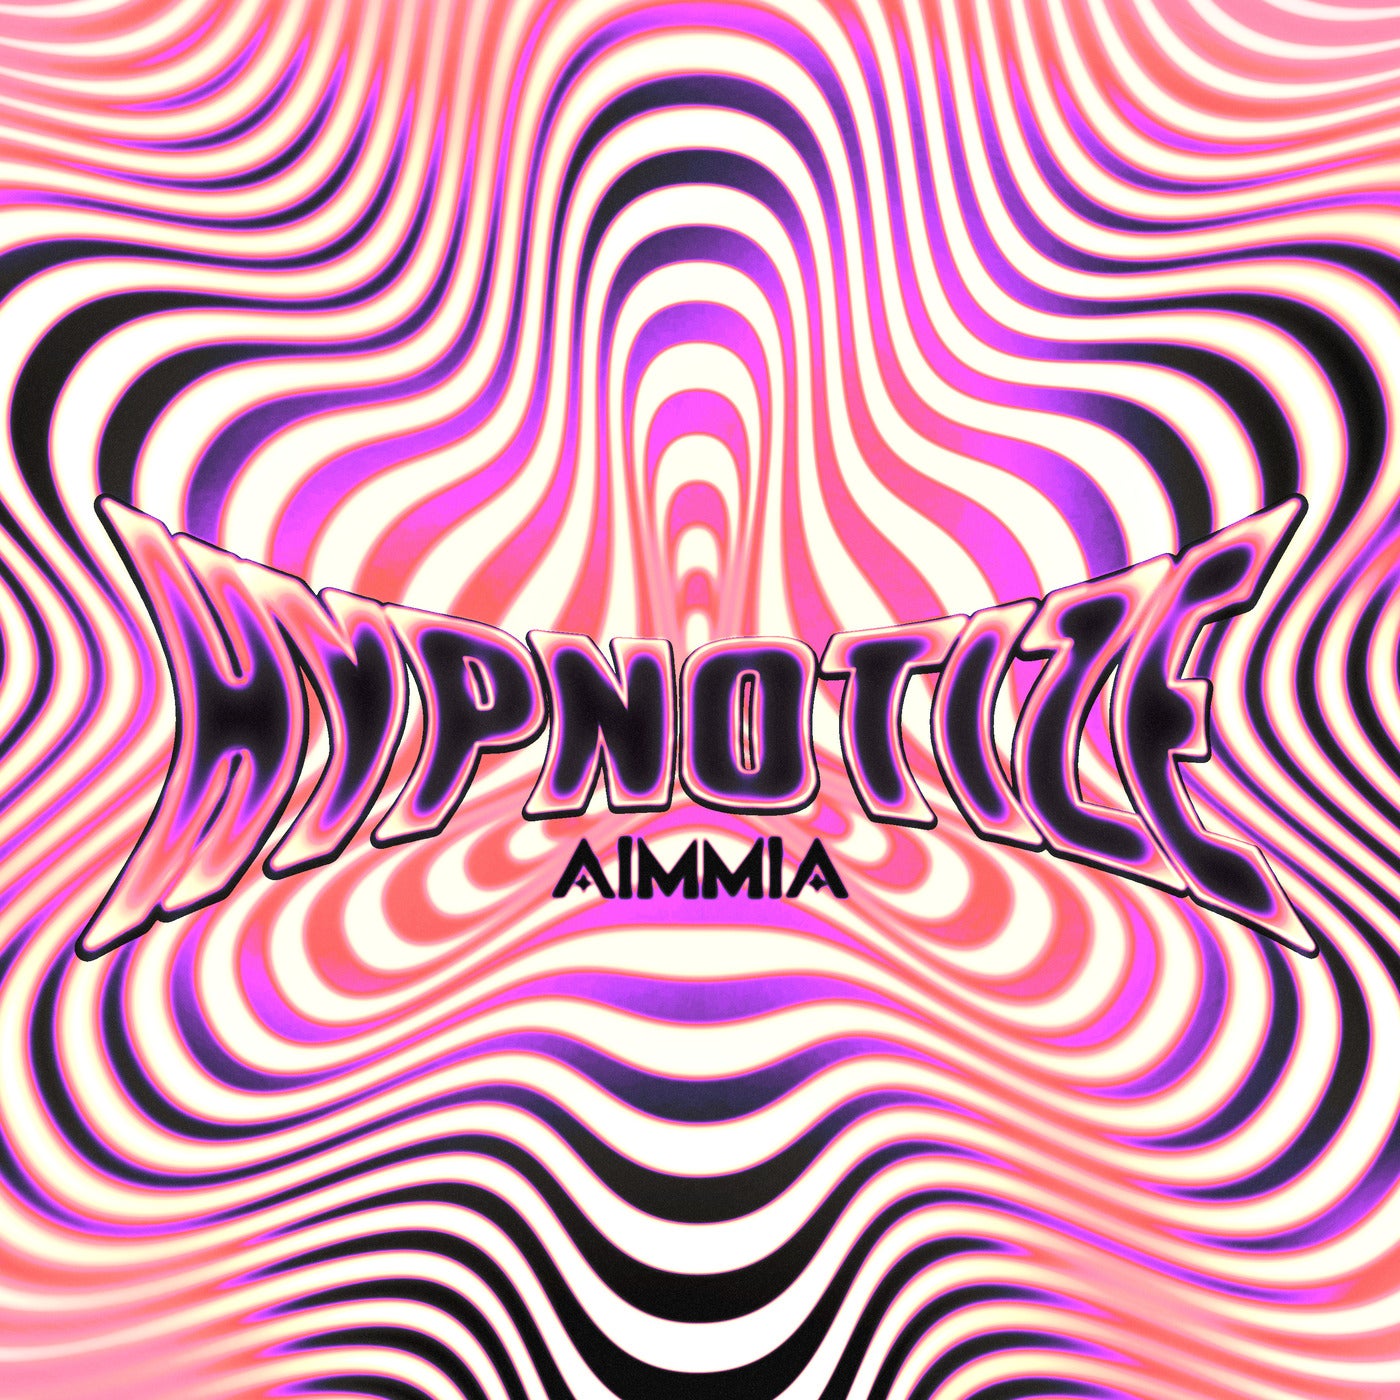 Hypnotize (Extended Mix) - Extended Mix